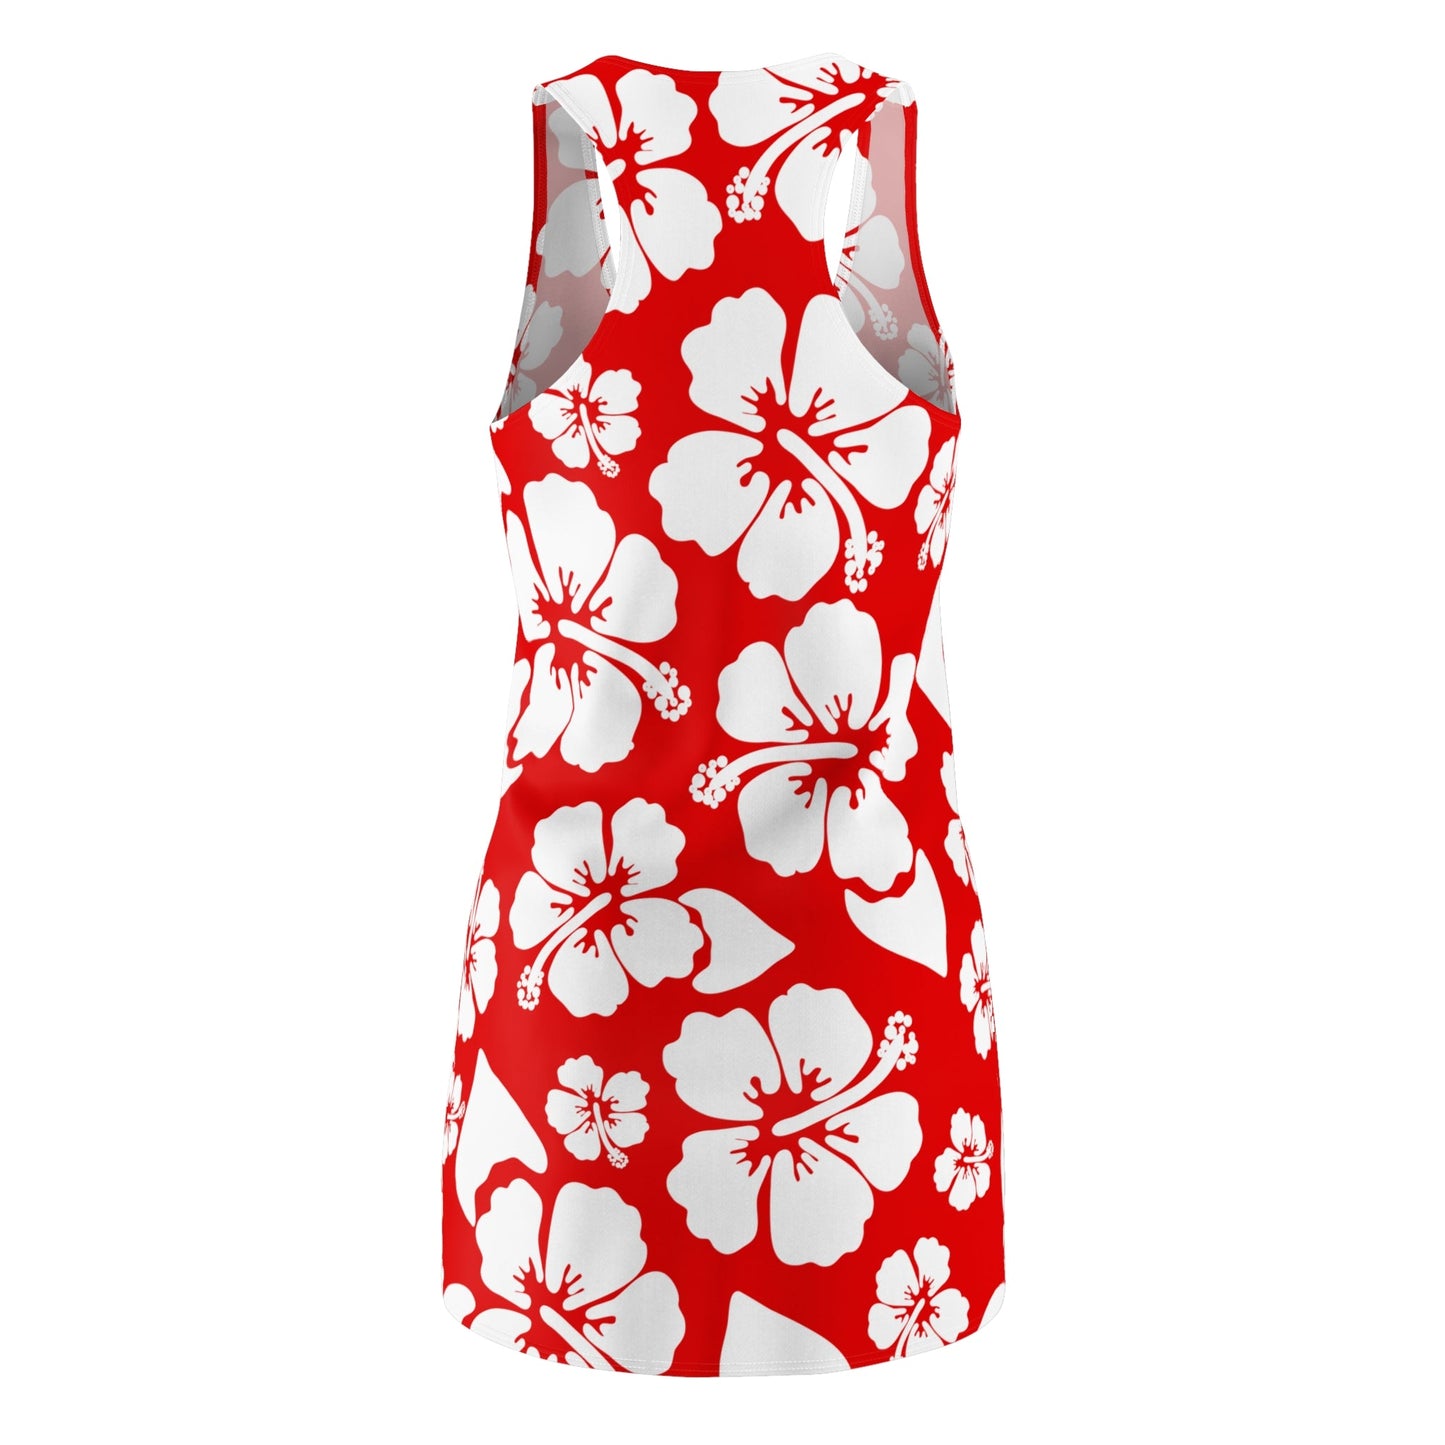 All Over Prints - Hawaiian Style Women's Cut & Sew Racerback Dress